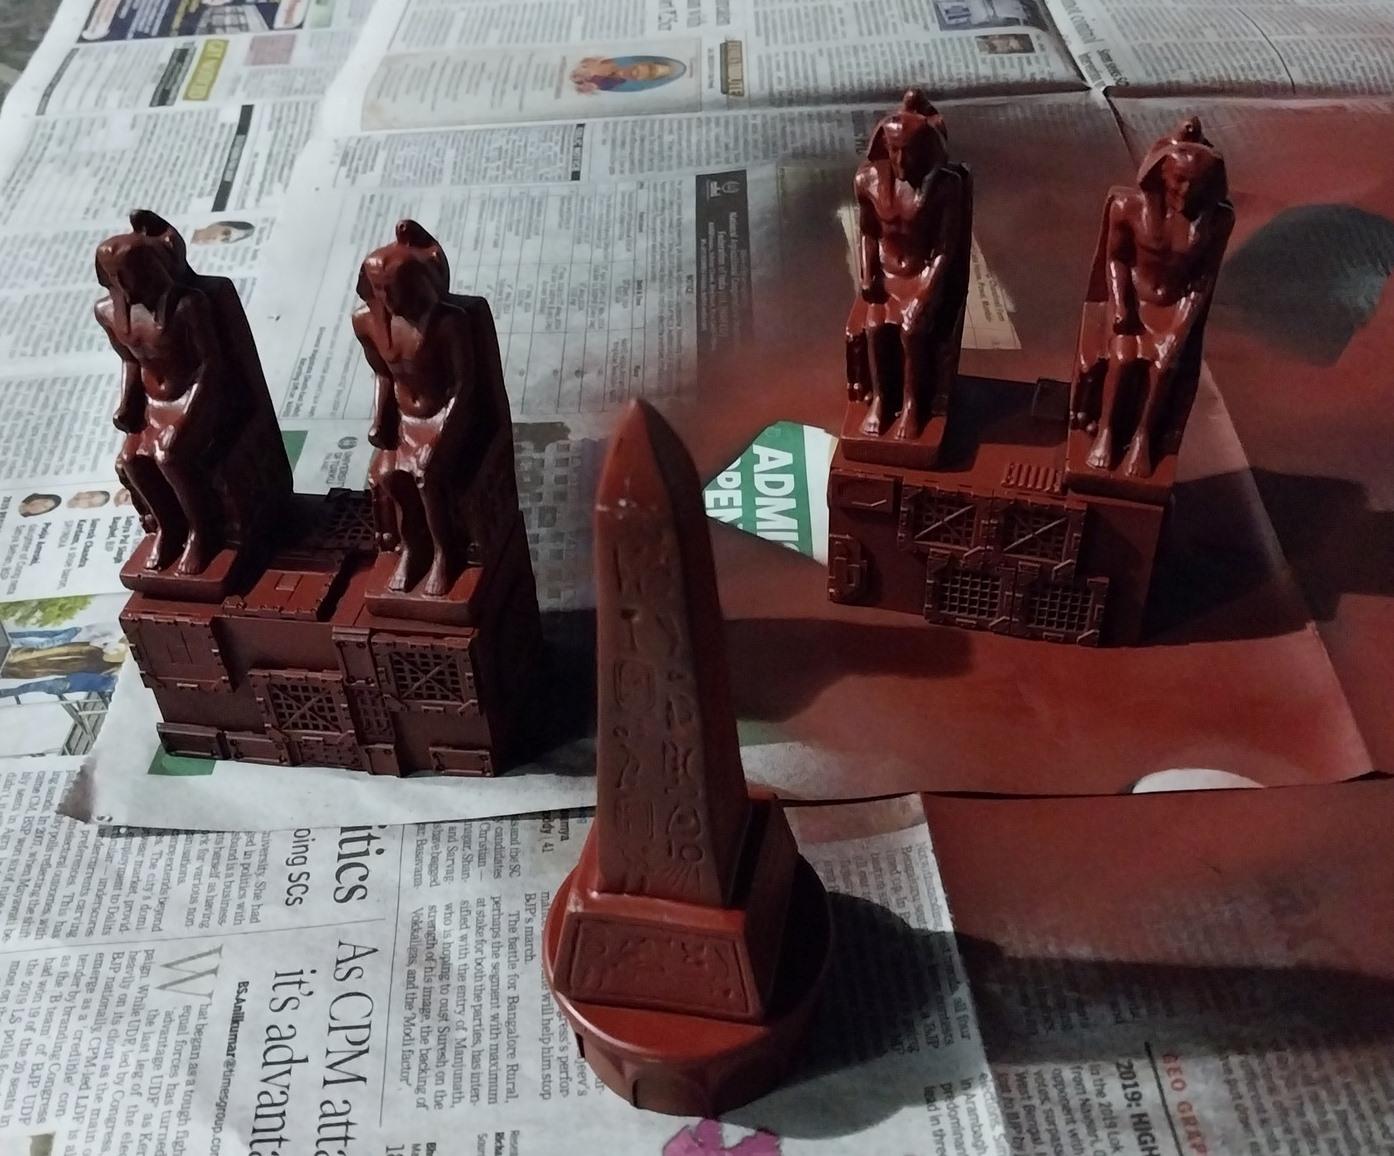 Egypt, Souvenir, Statue, Terrain, Wasteland, Work In Progress